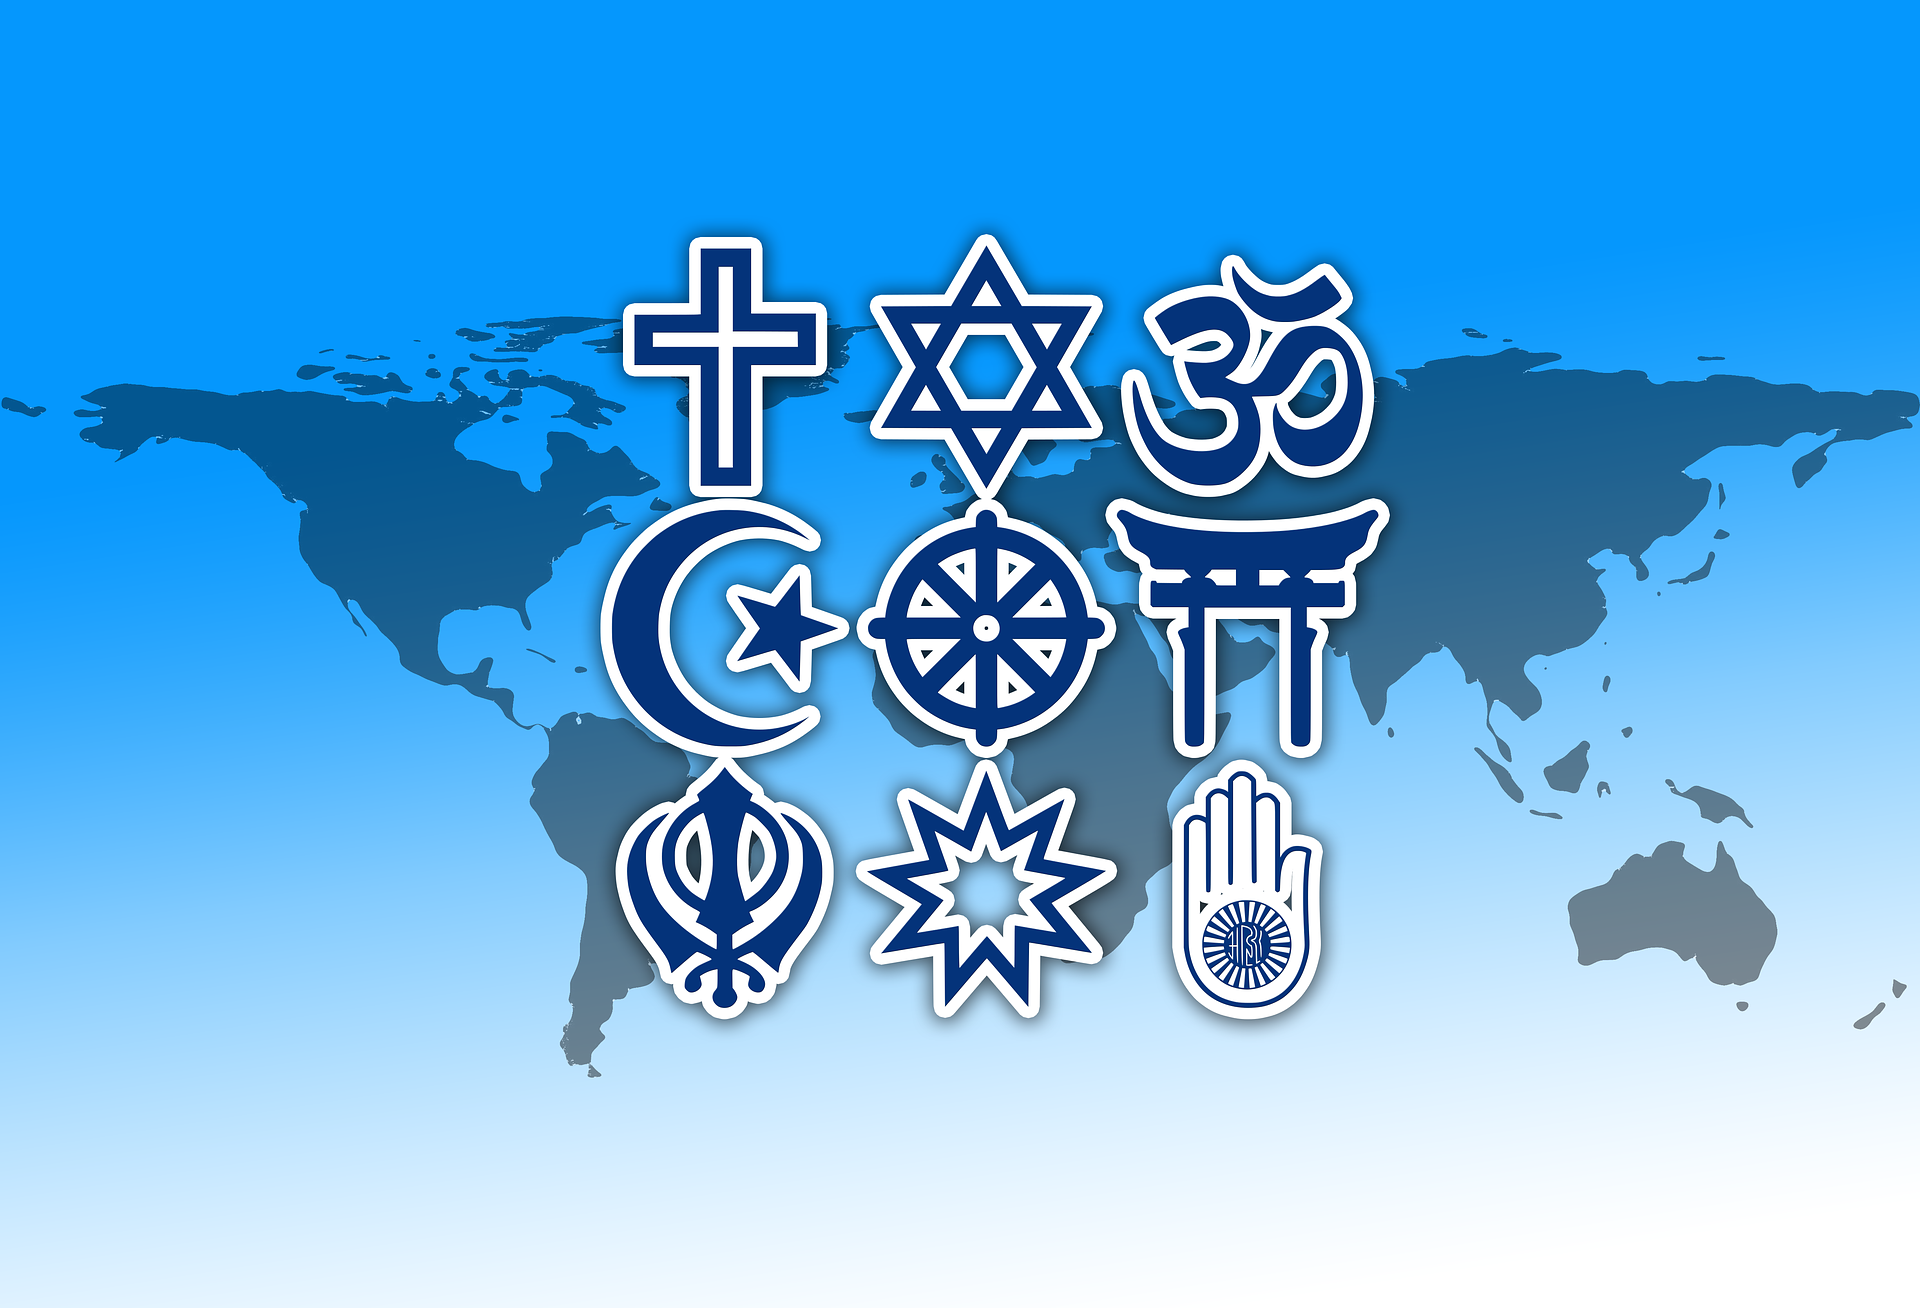 Image of Religious Symbols over Atlas